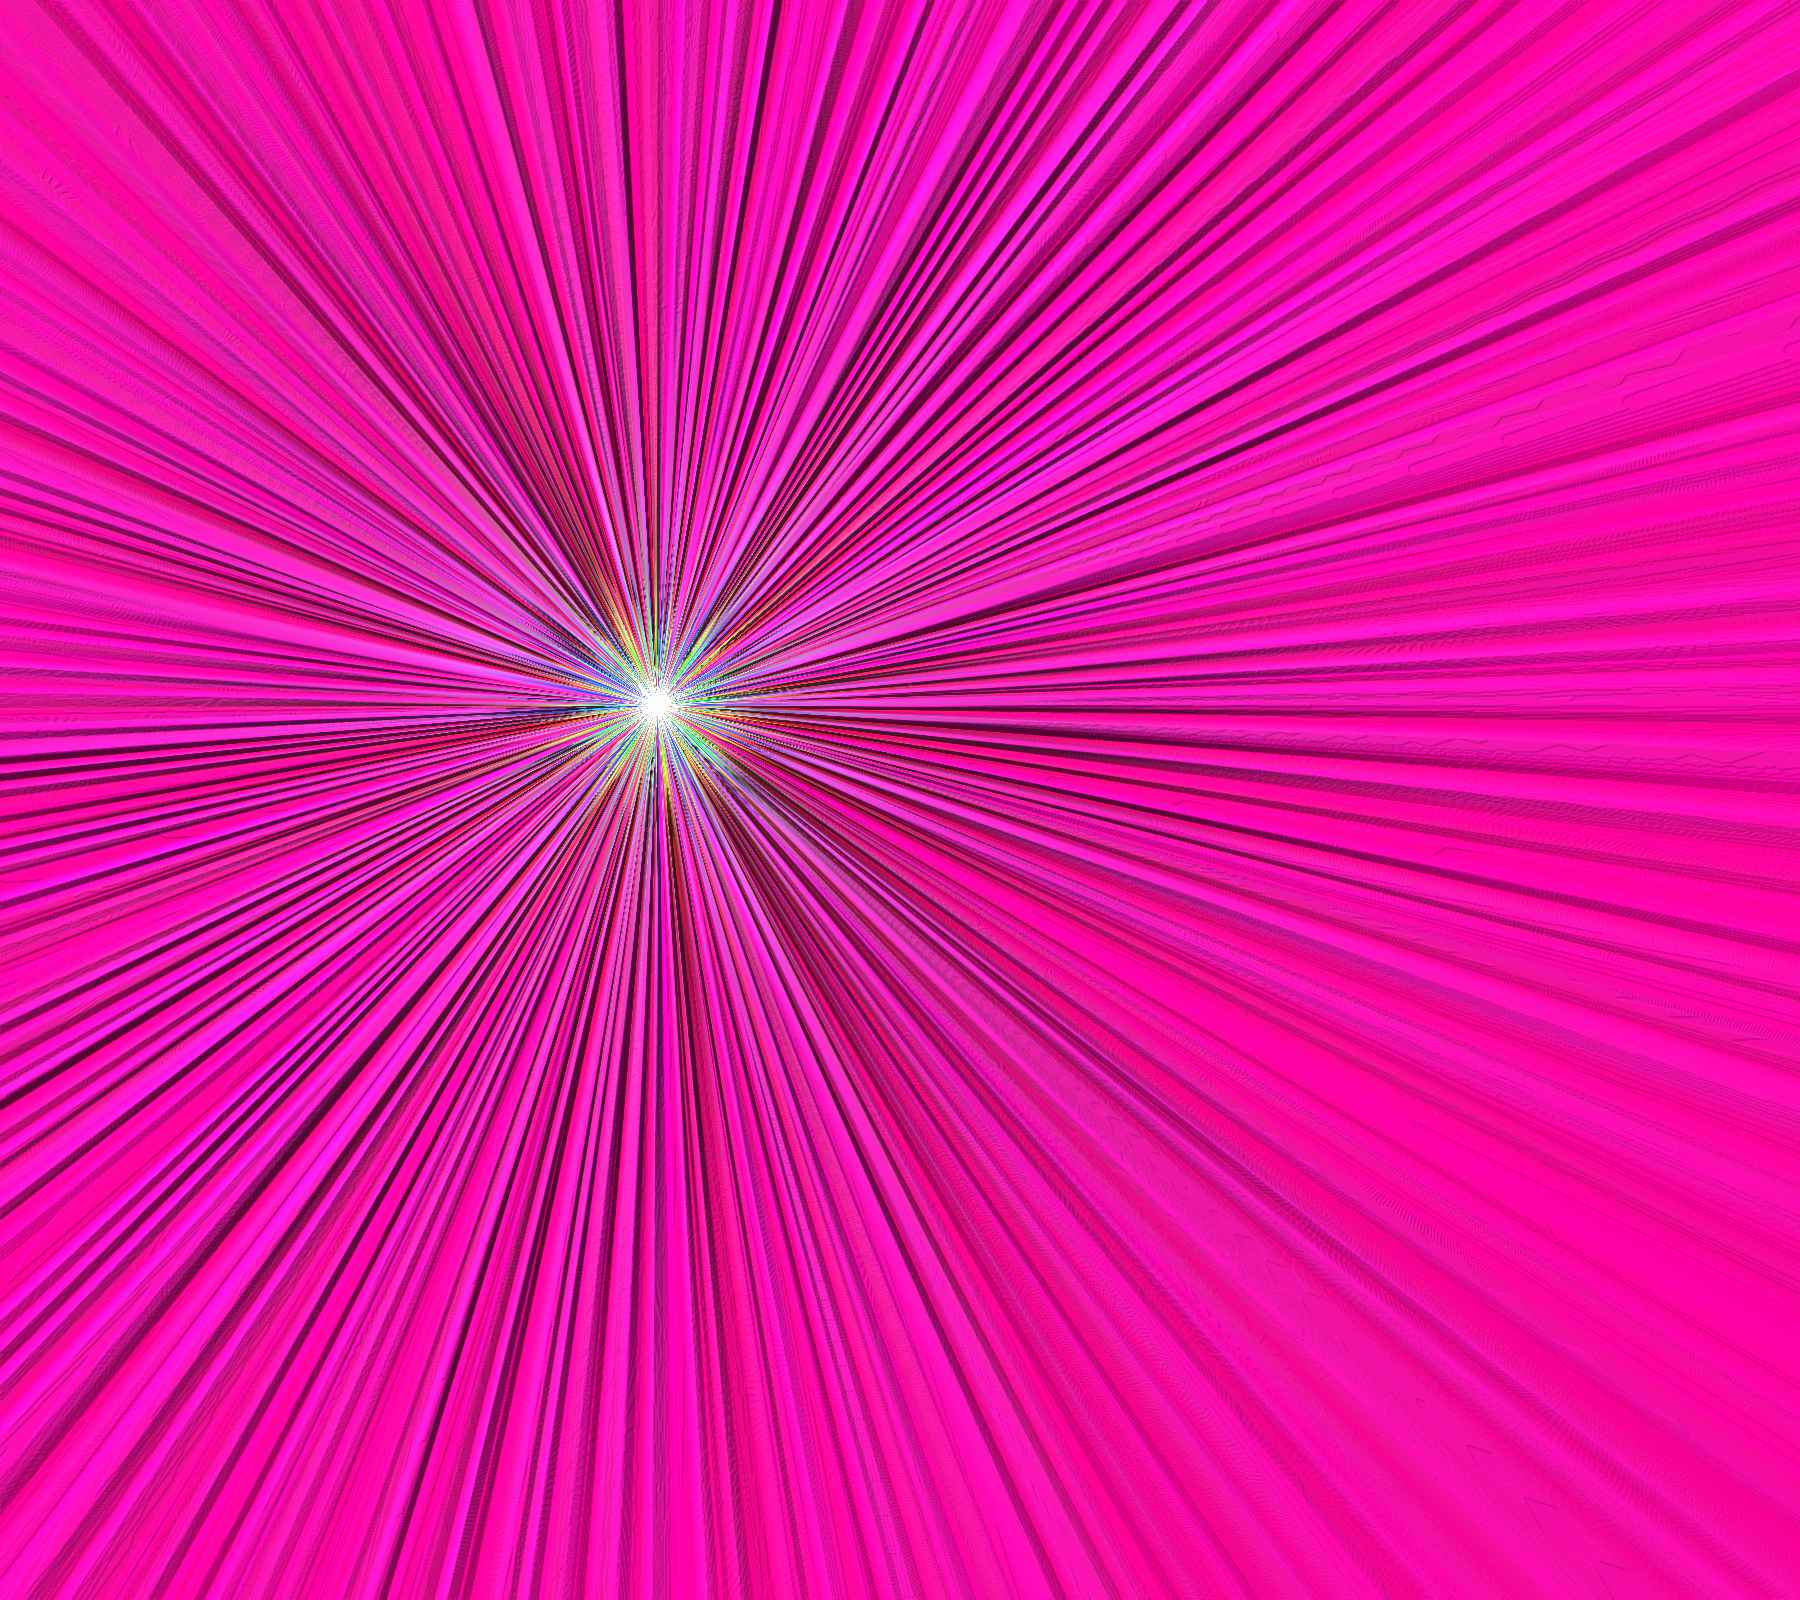 Hot Pink Starburst Radiating Lines Background 1800x1600 Background